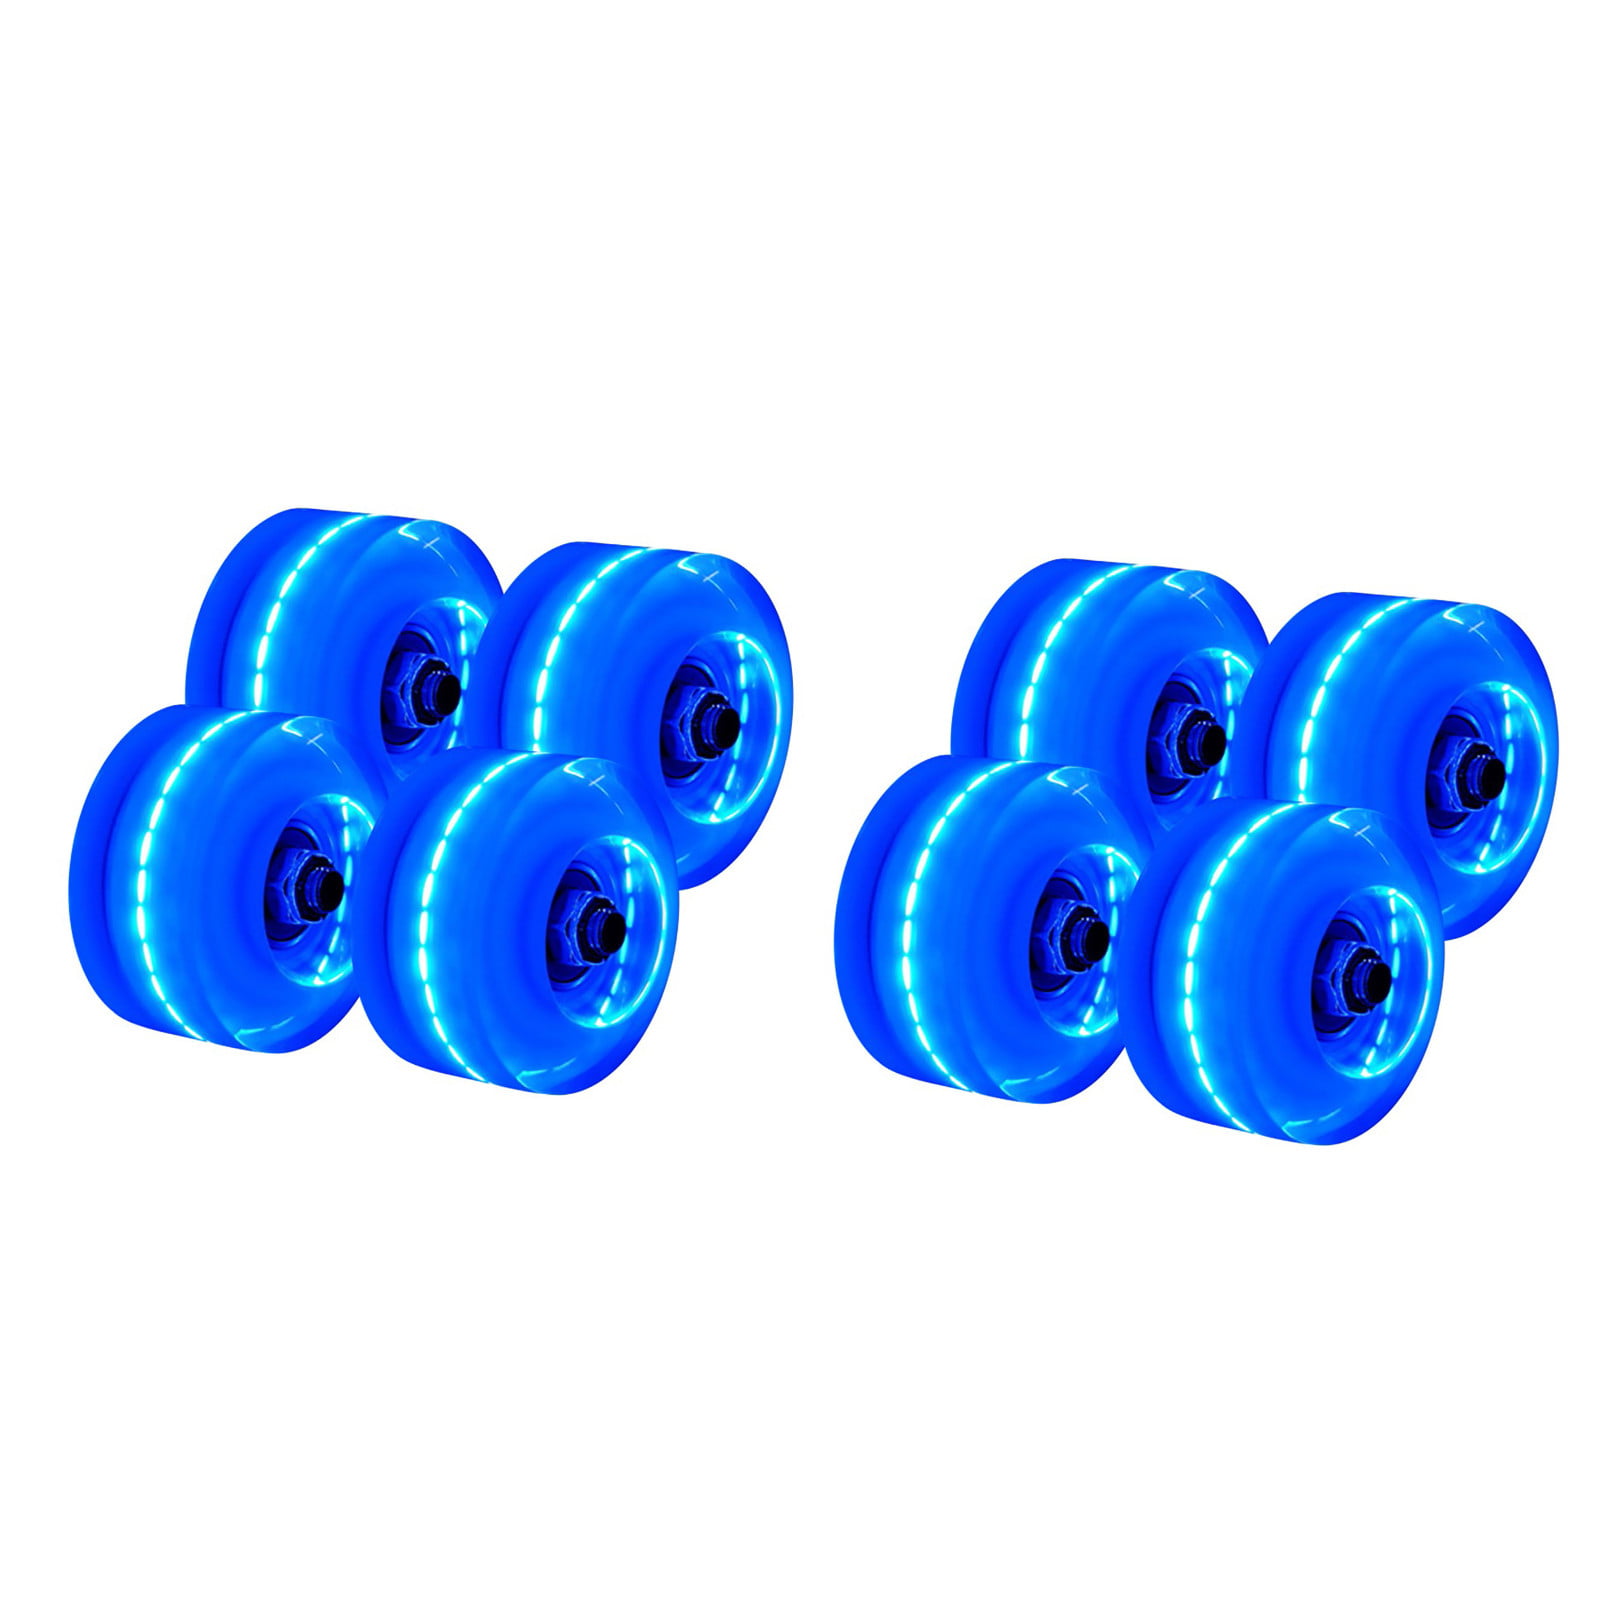 4PCS Luminous Light Up Quad Roller Skate Wheels with BankRoll Bearings Installed 